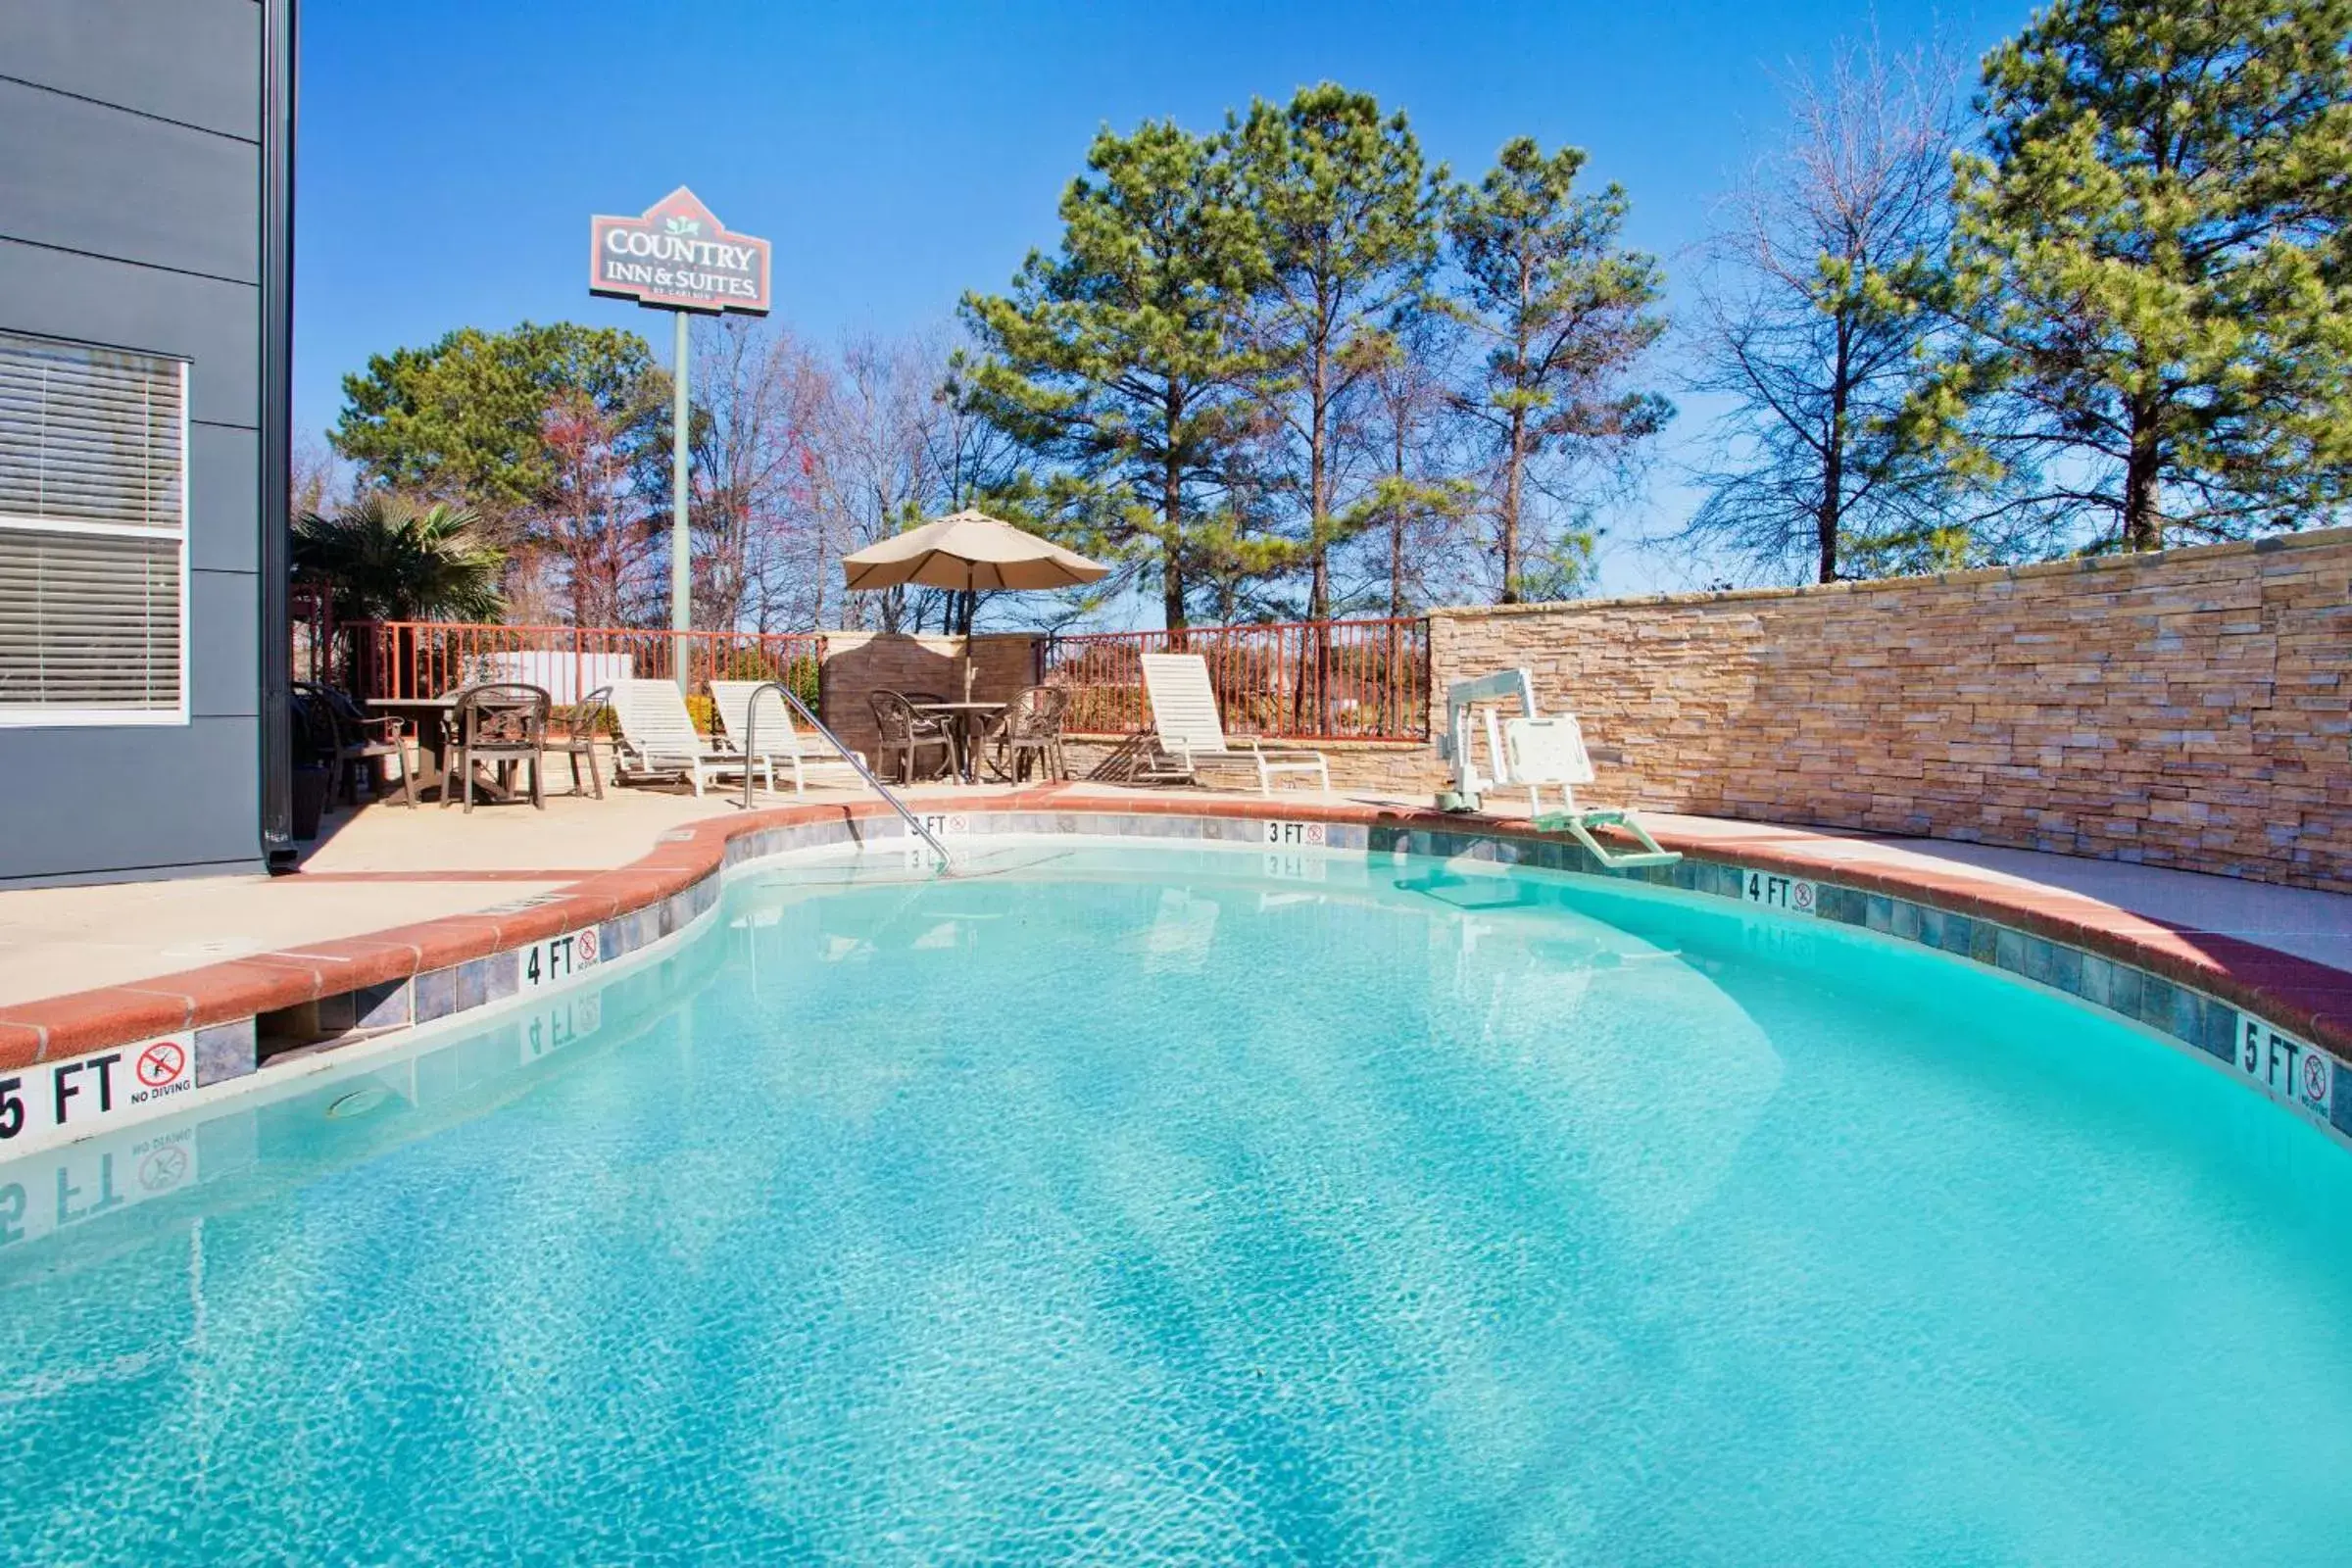 Swimming Pool in Country Inn & Suites by Radisson, Atlanta I-75 South, GA